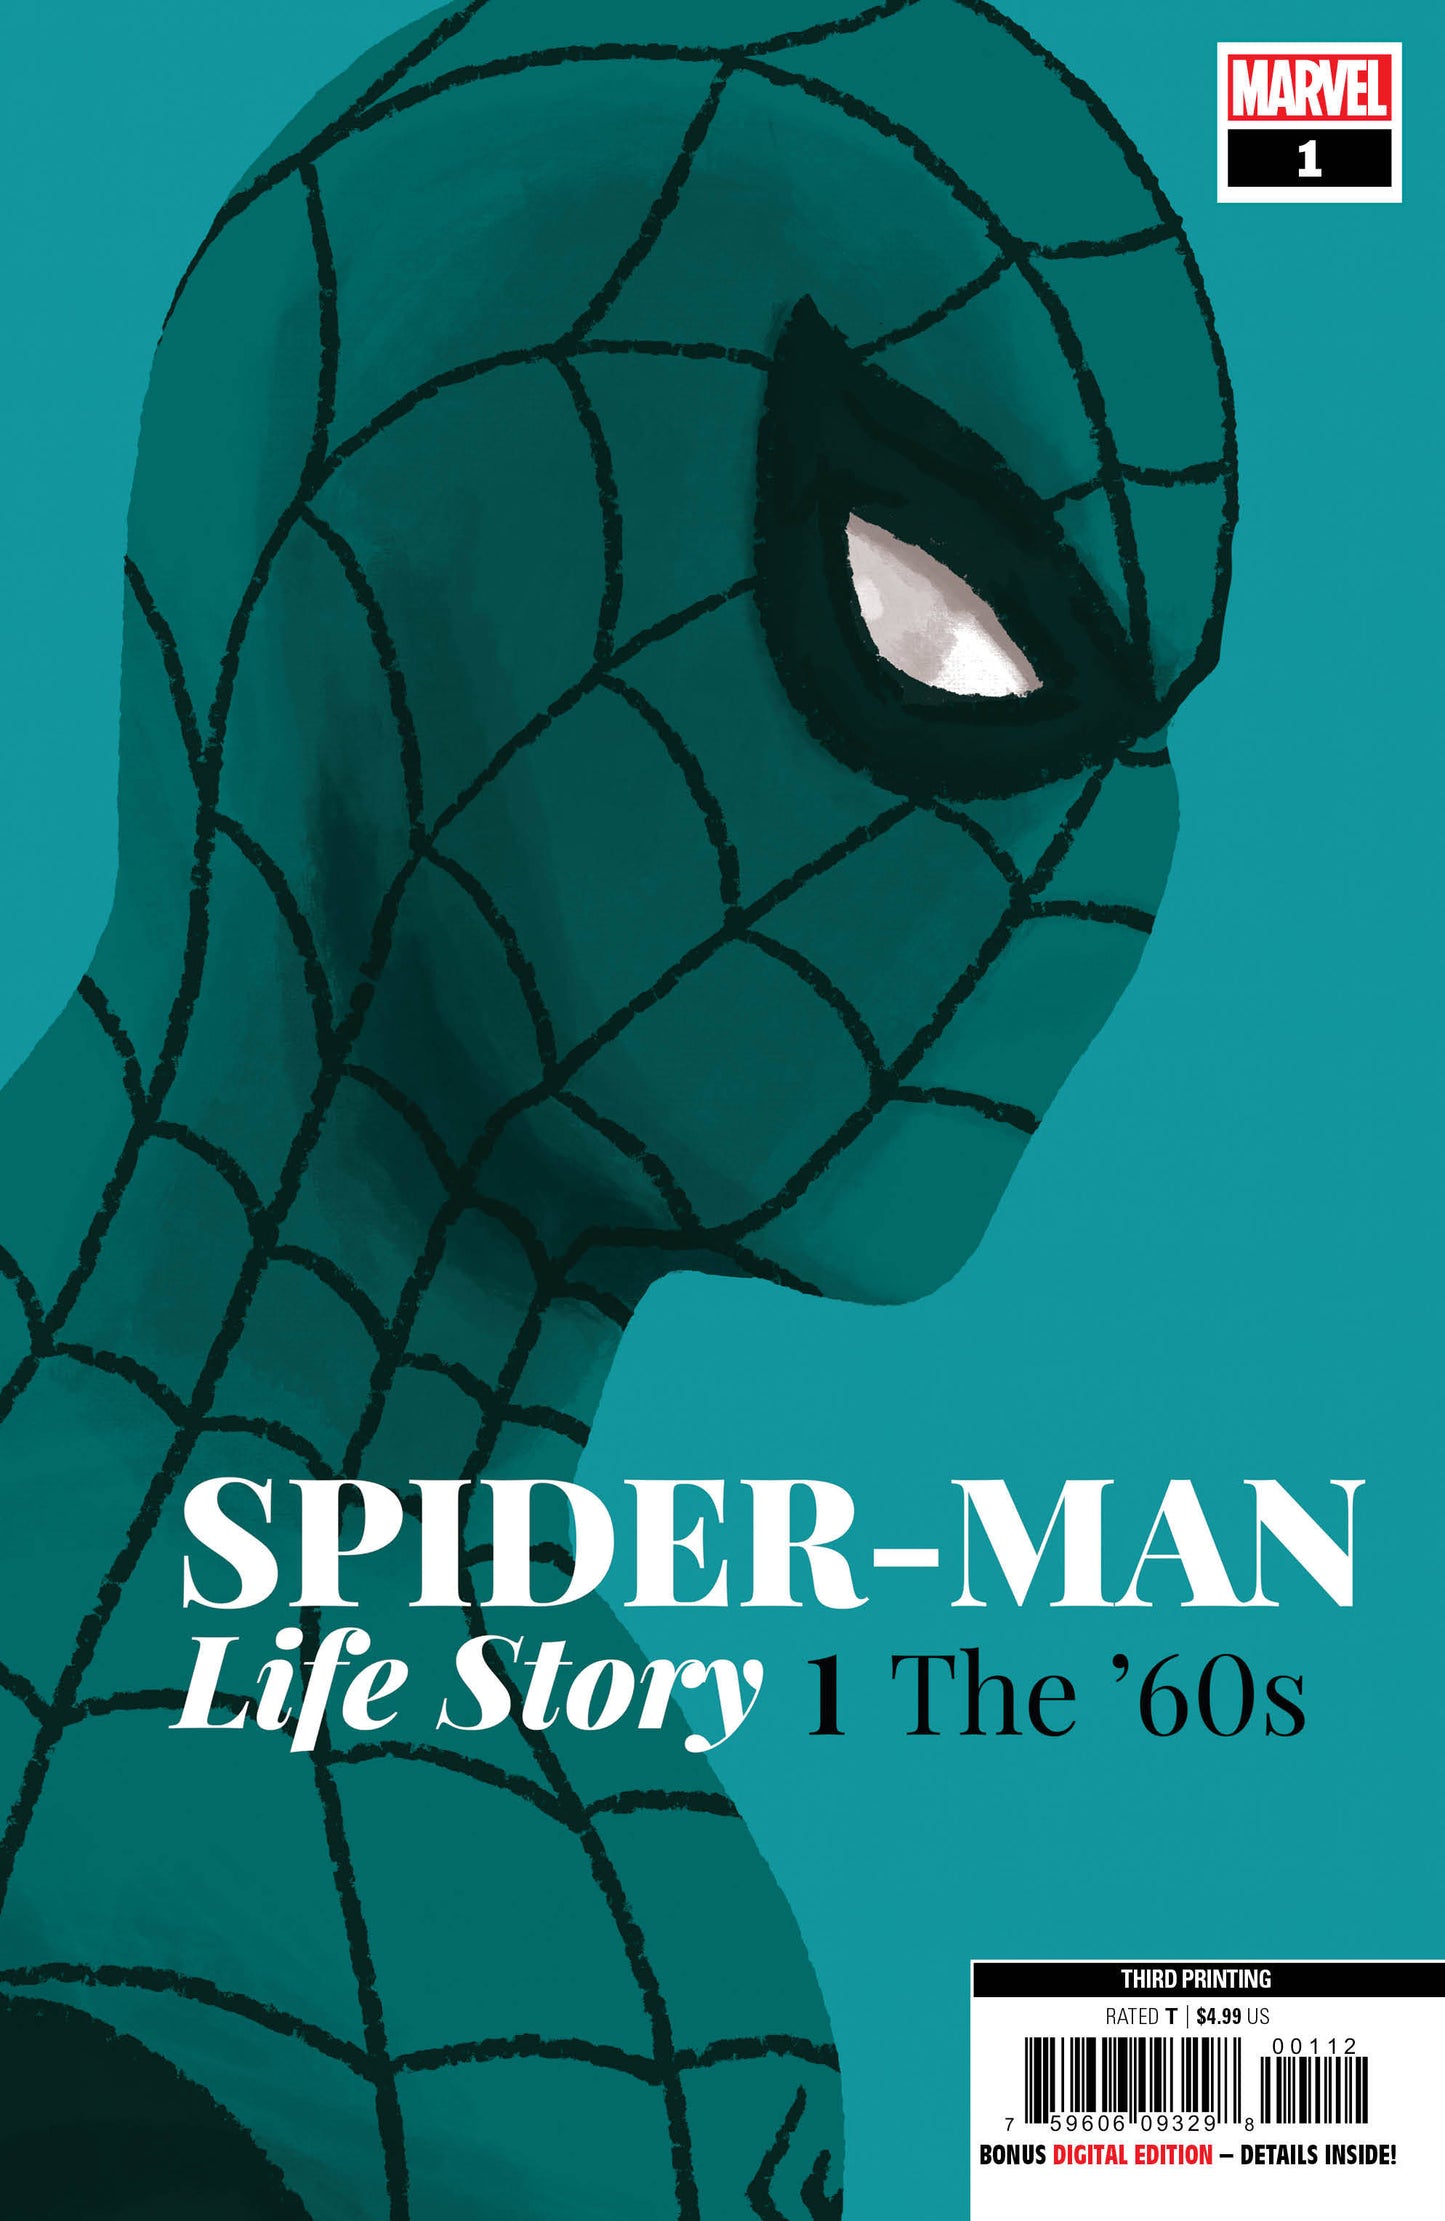 SPIDER-MAN LIFE STORY #1 (OF 6) 3rd Print Chip Zdarsky Variant (07/24/2019) MARVEL